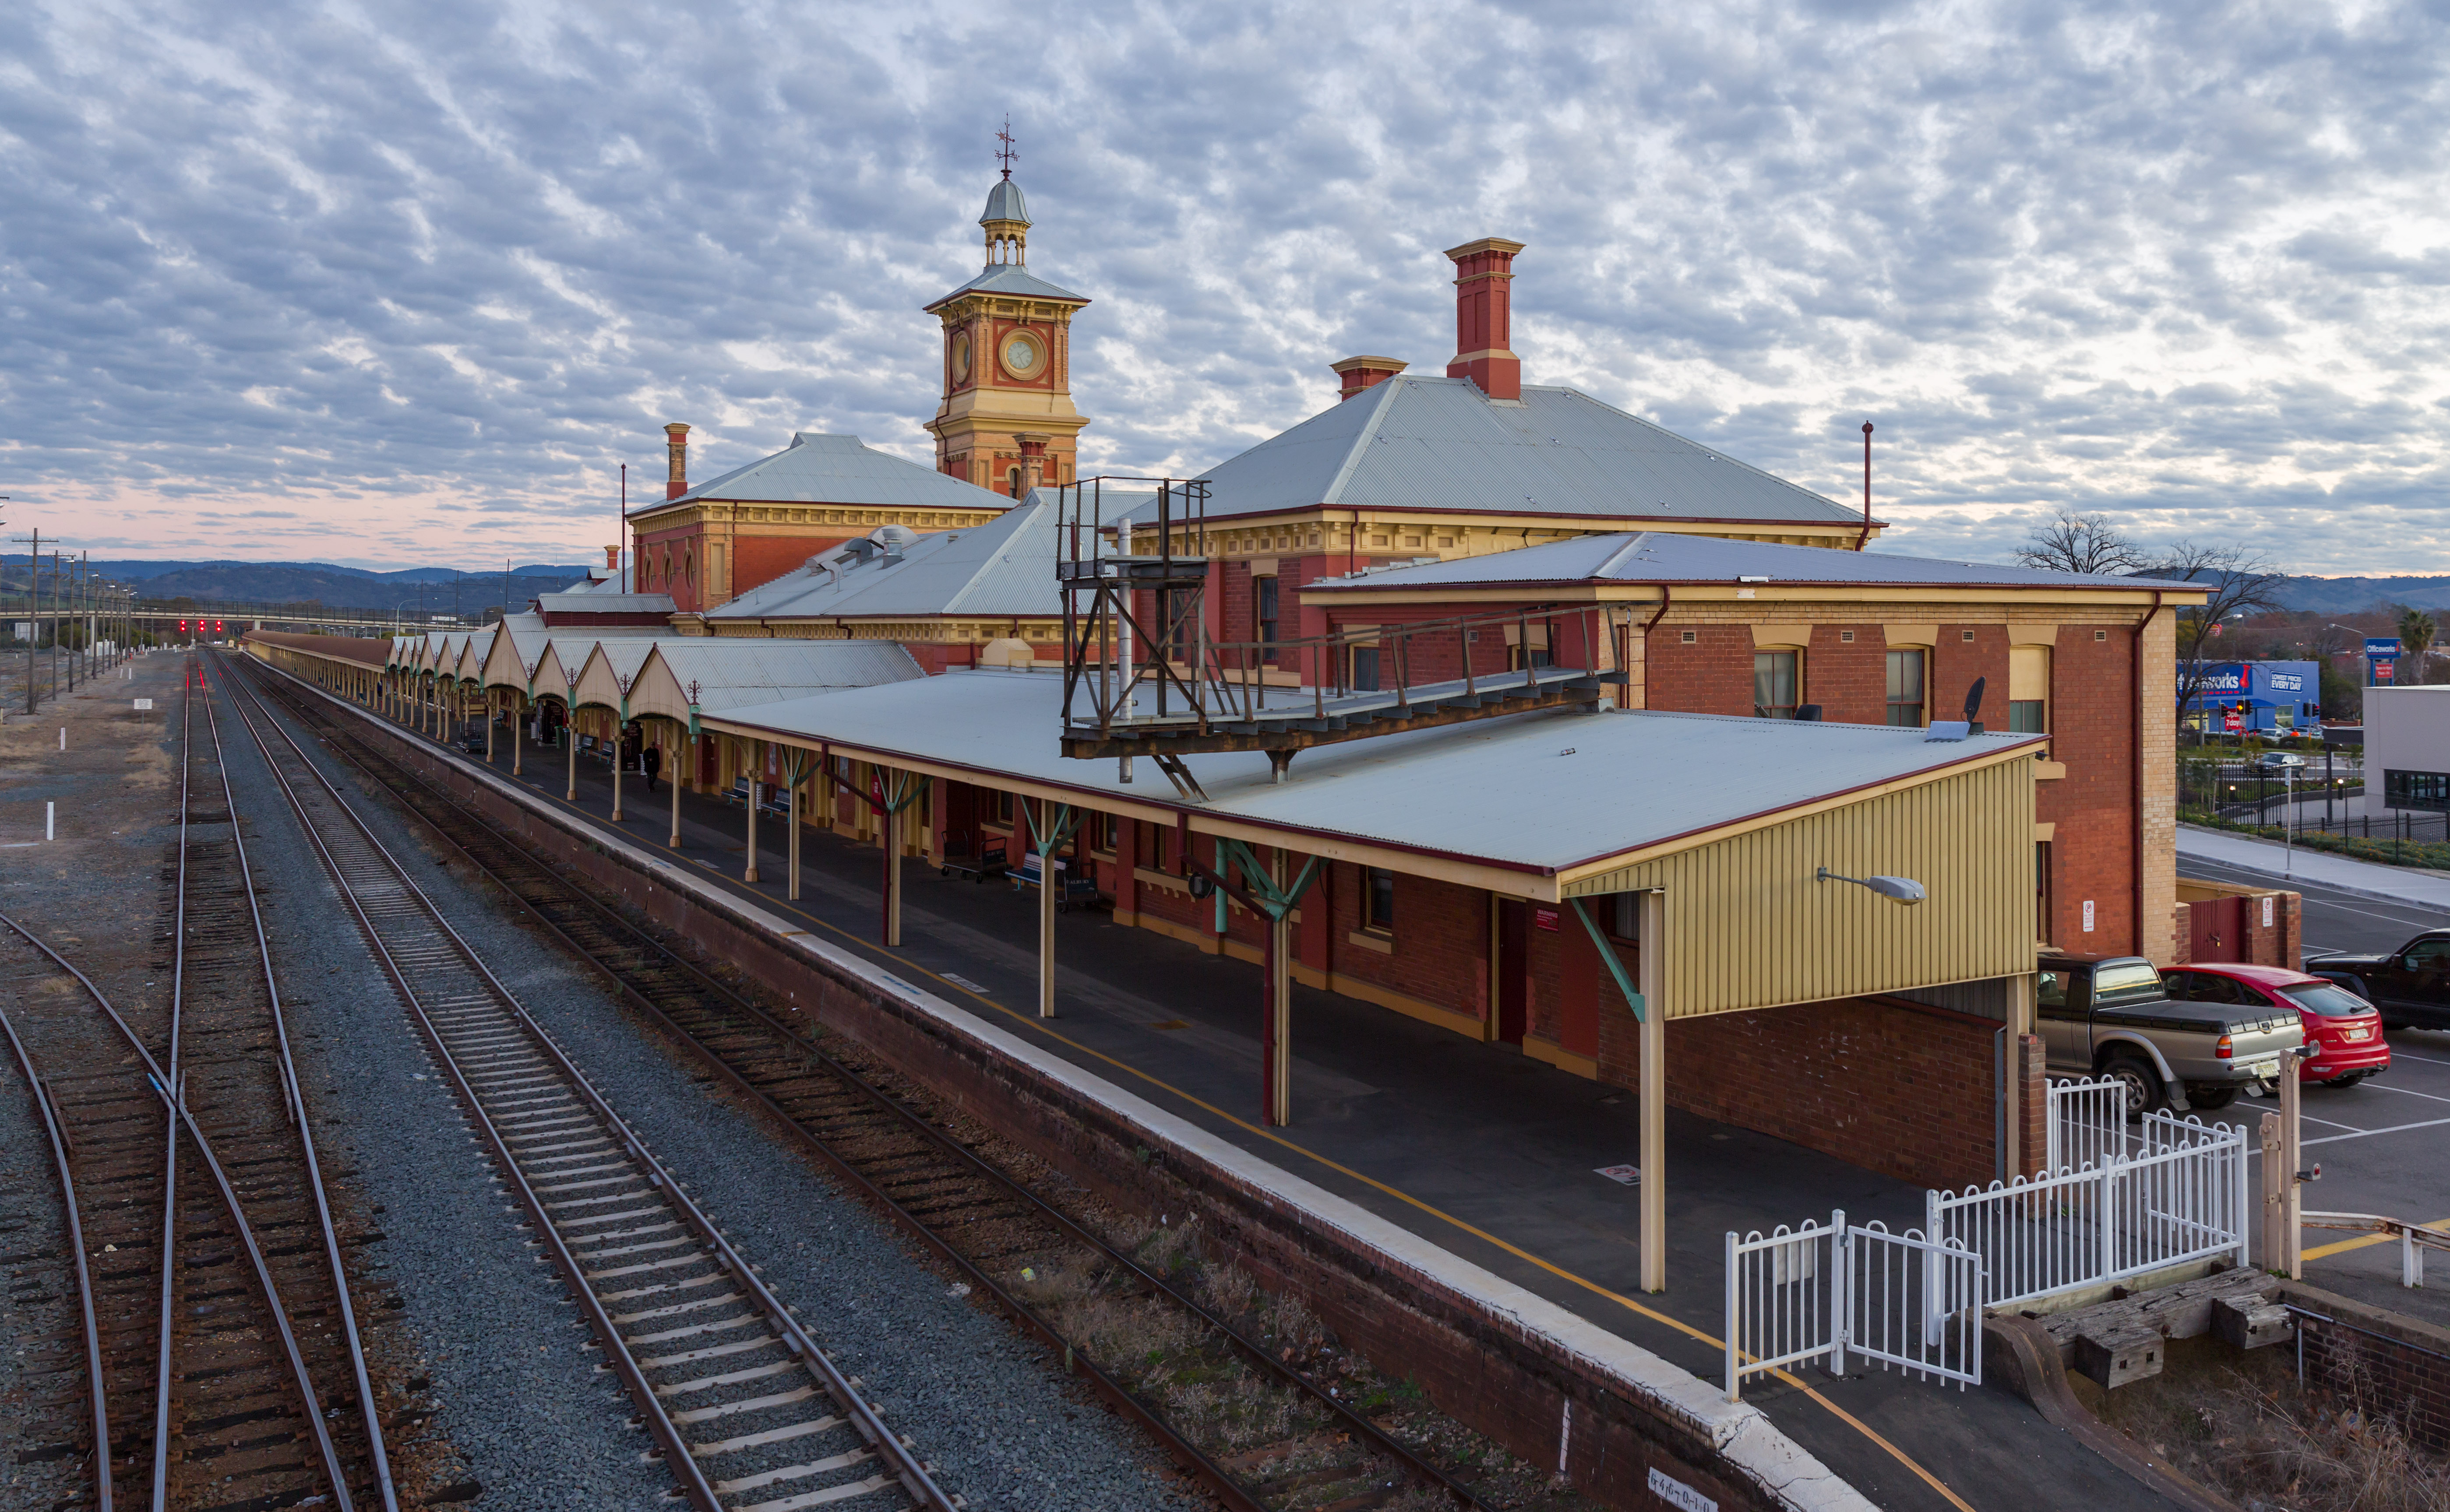 Railway station photo